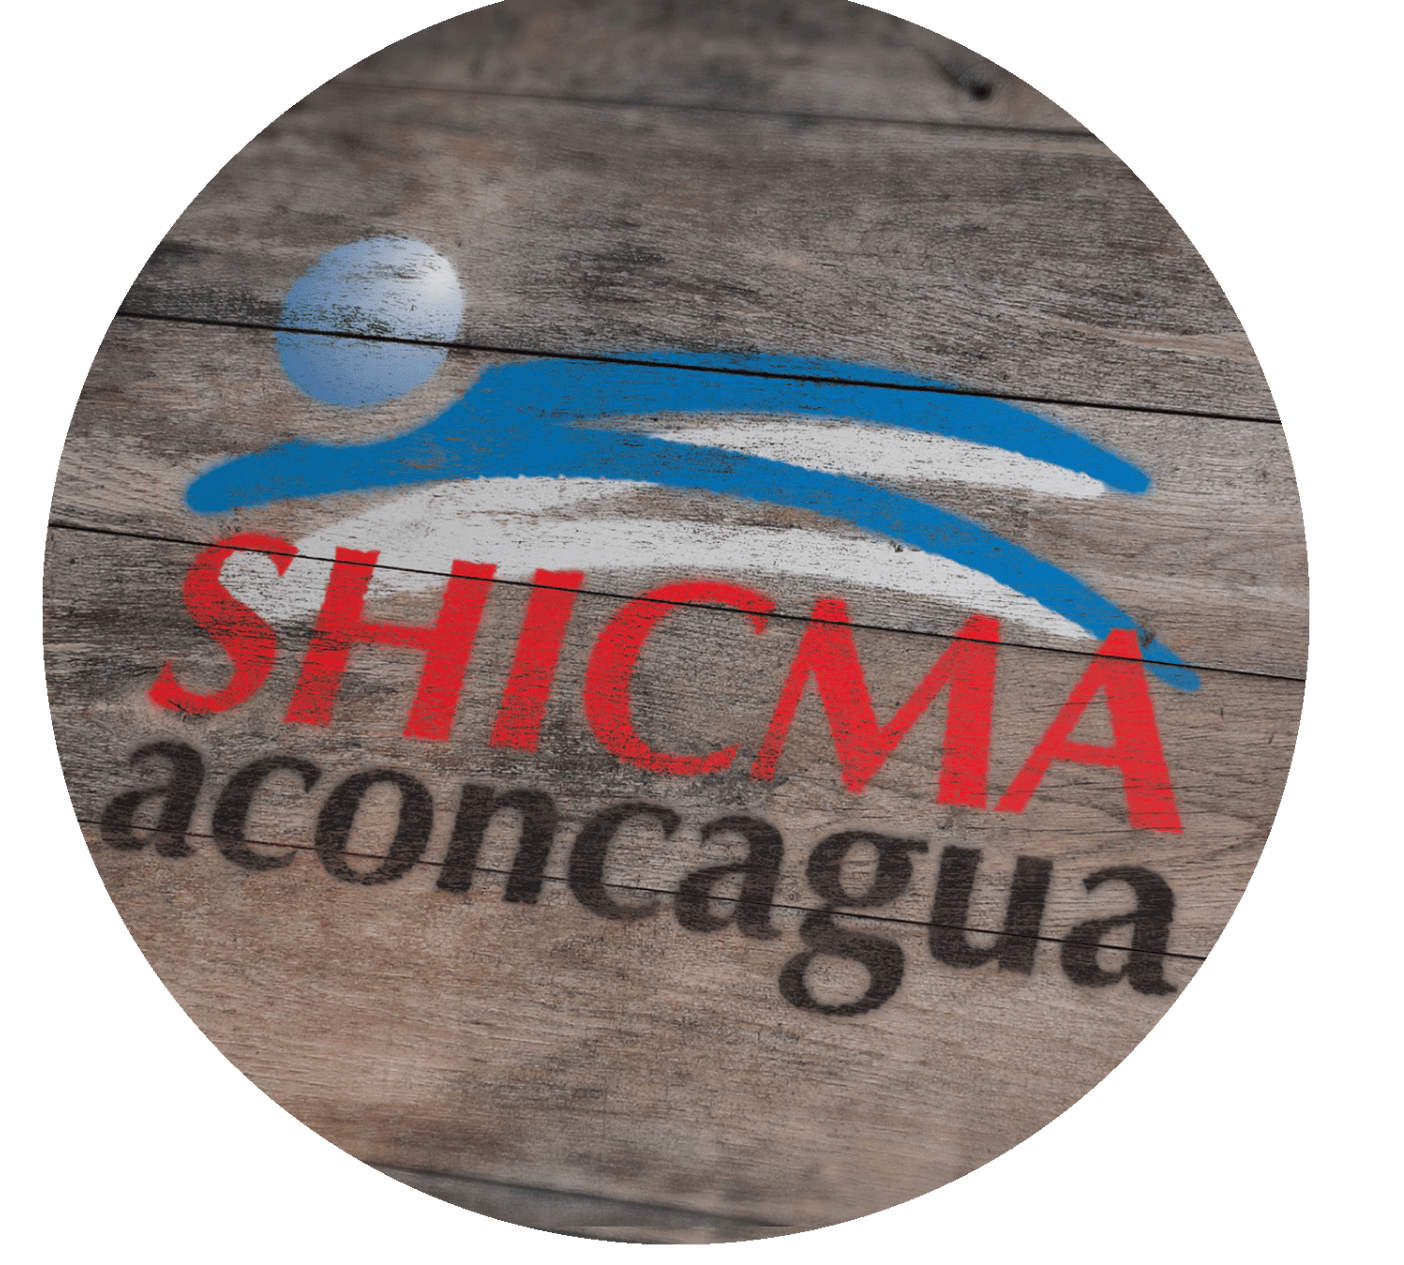 Shicma Aconcagua logo